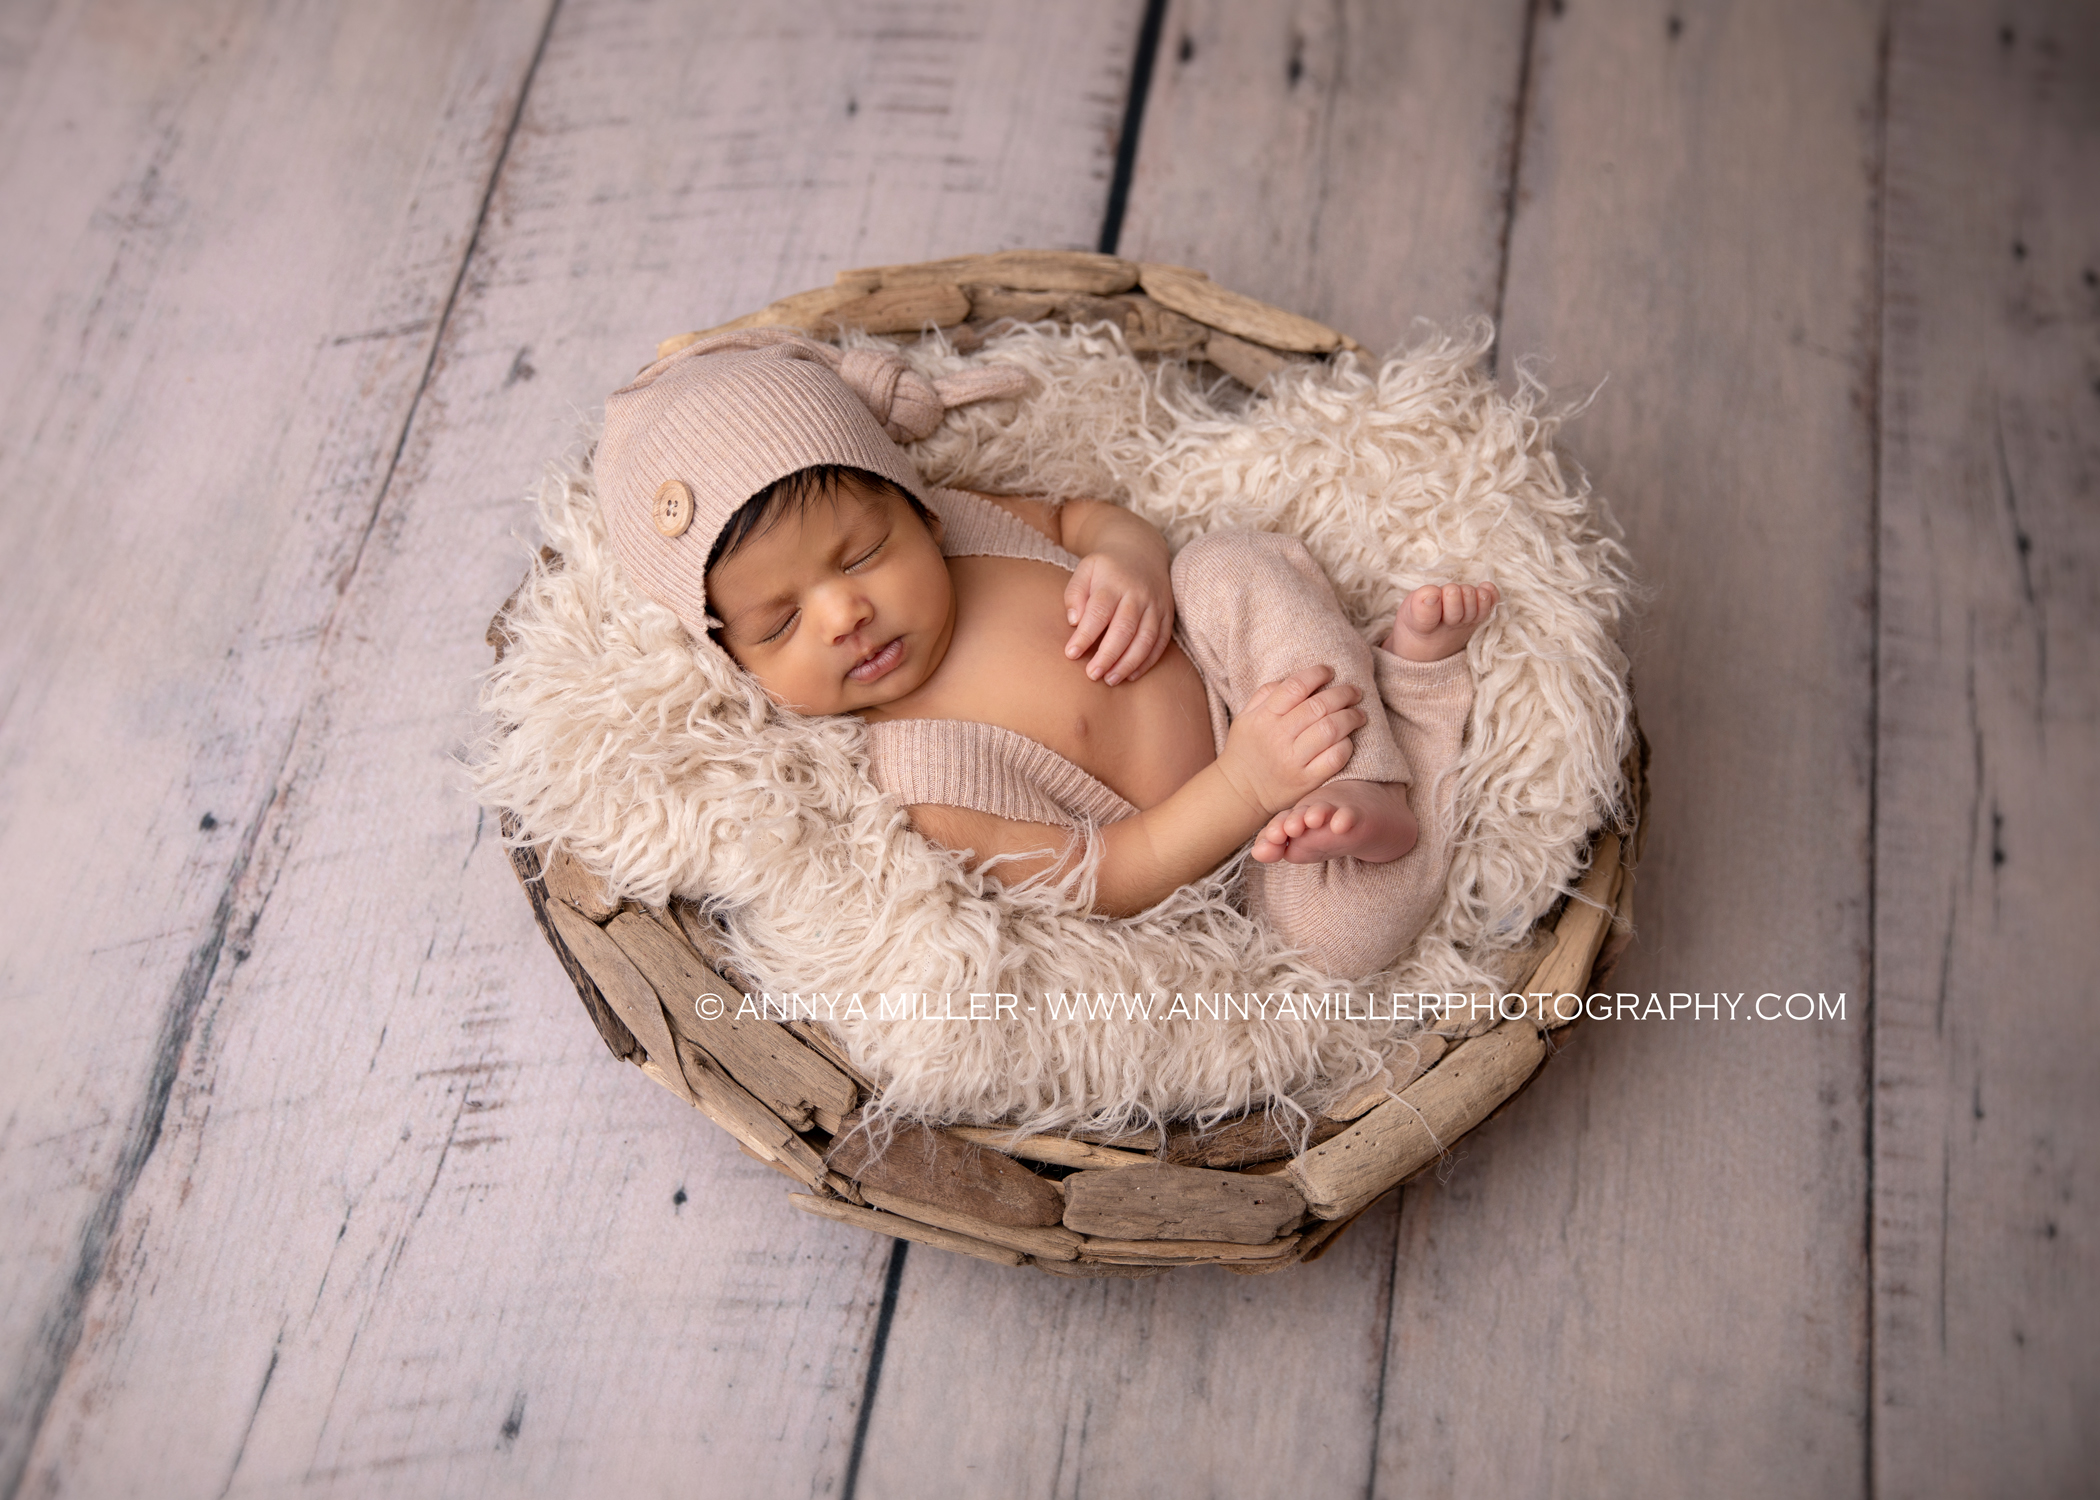 Durham newborn photos of baby boy by Annya Miller photography